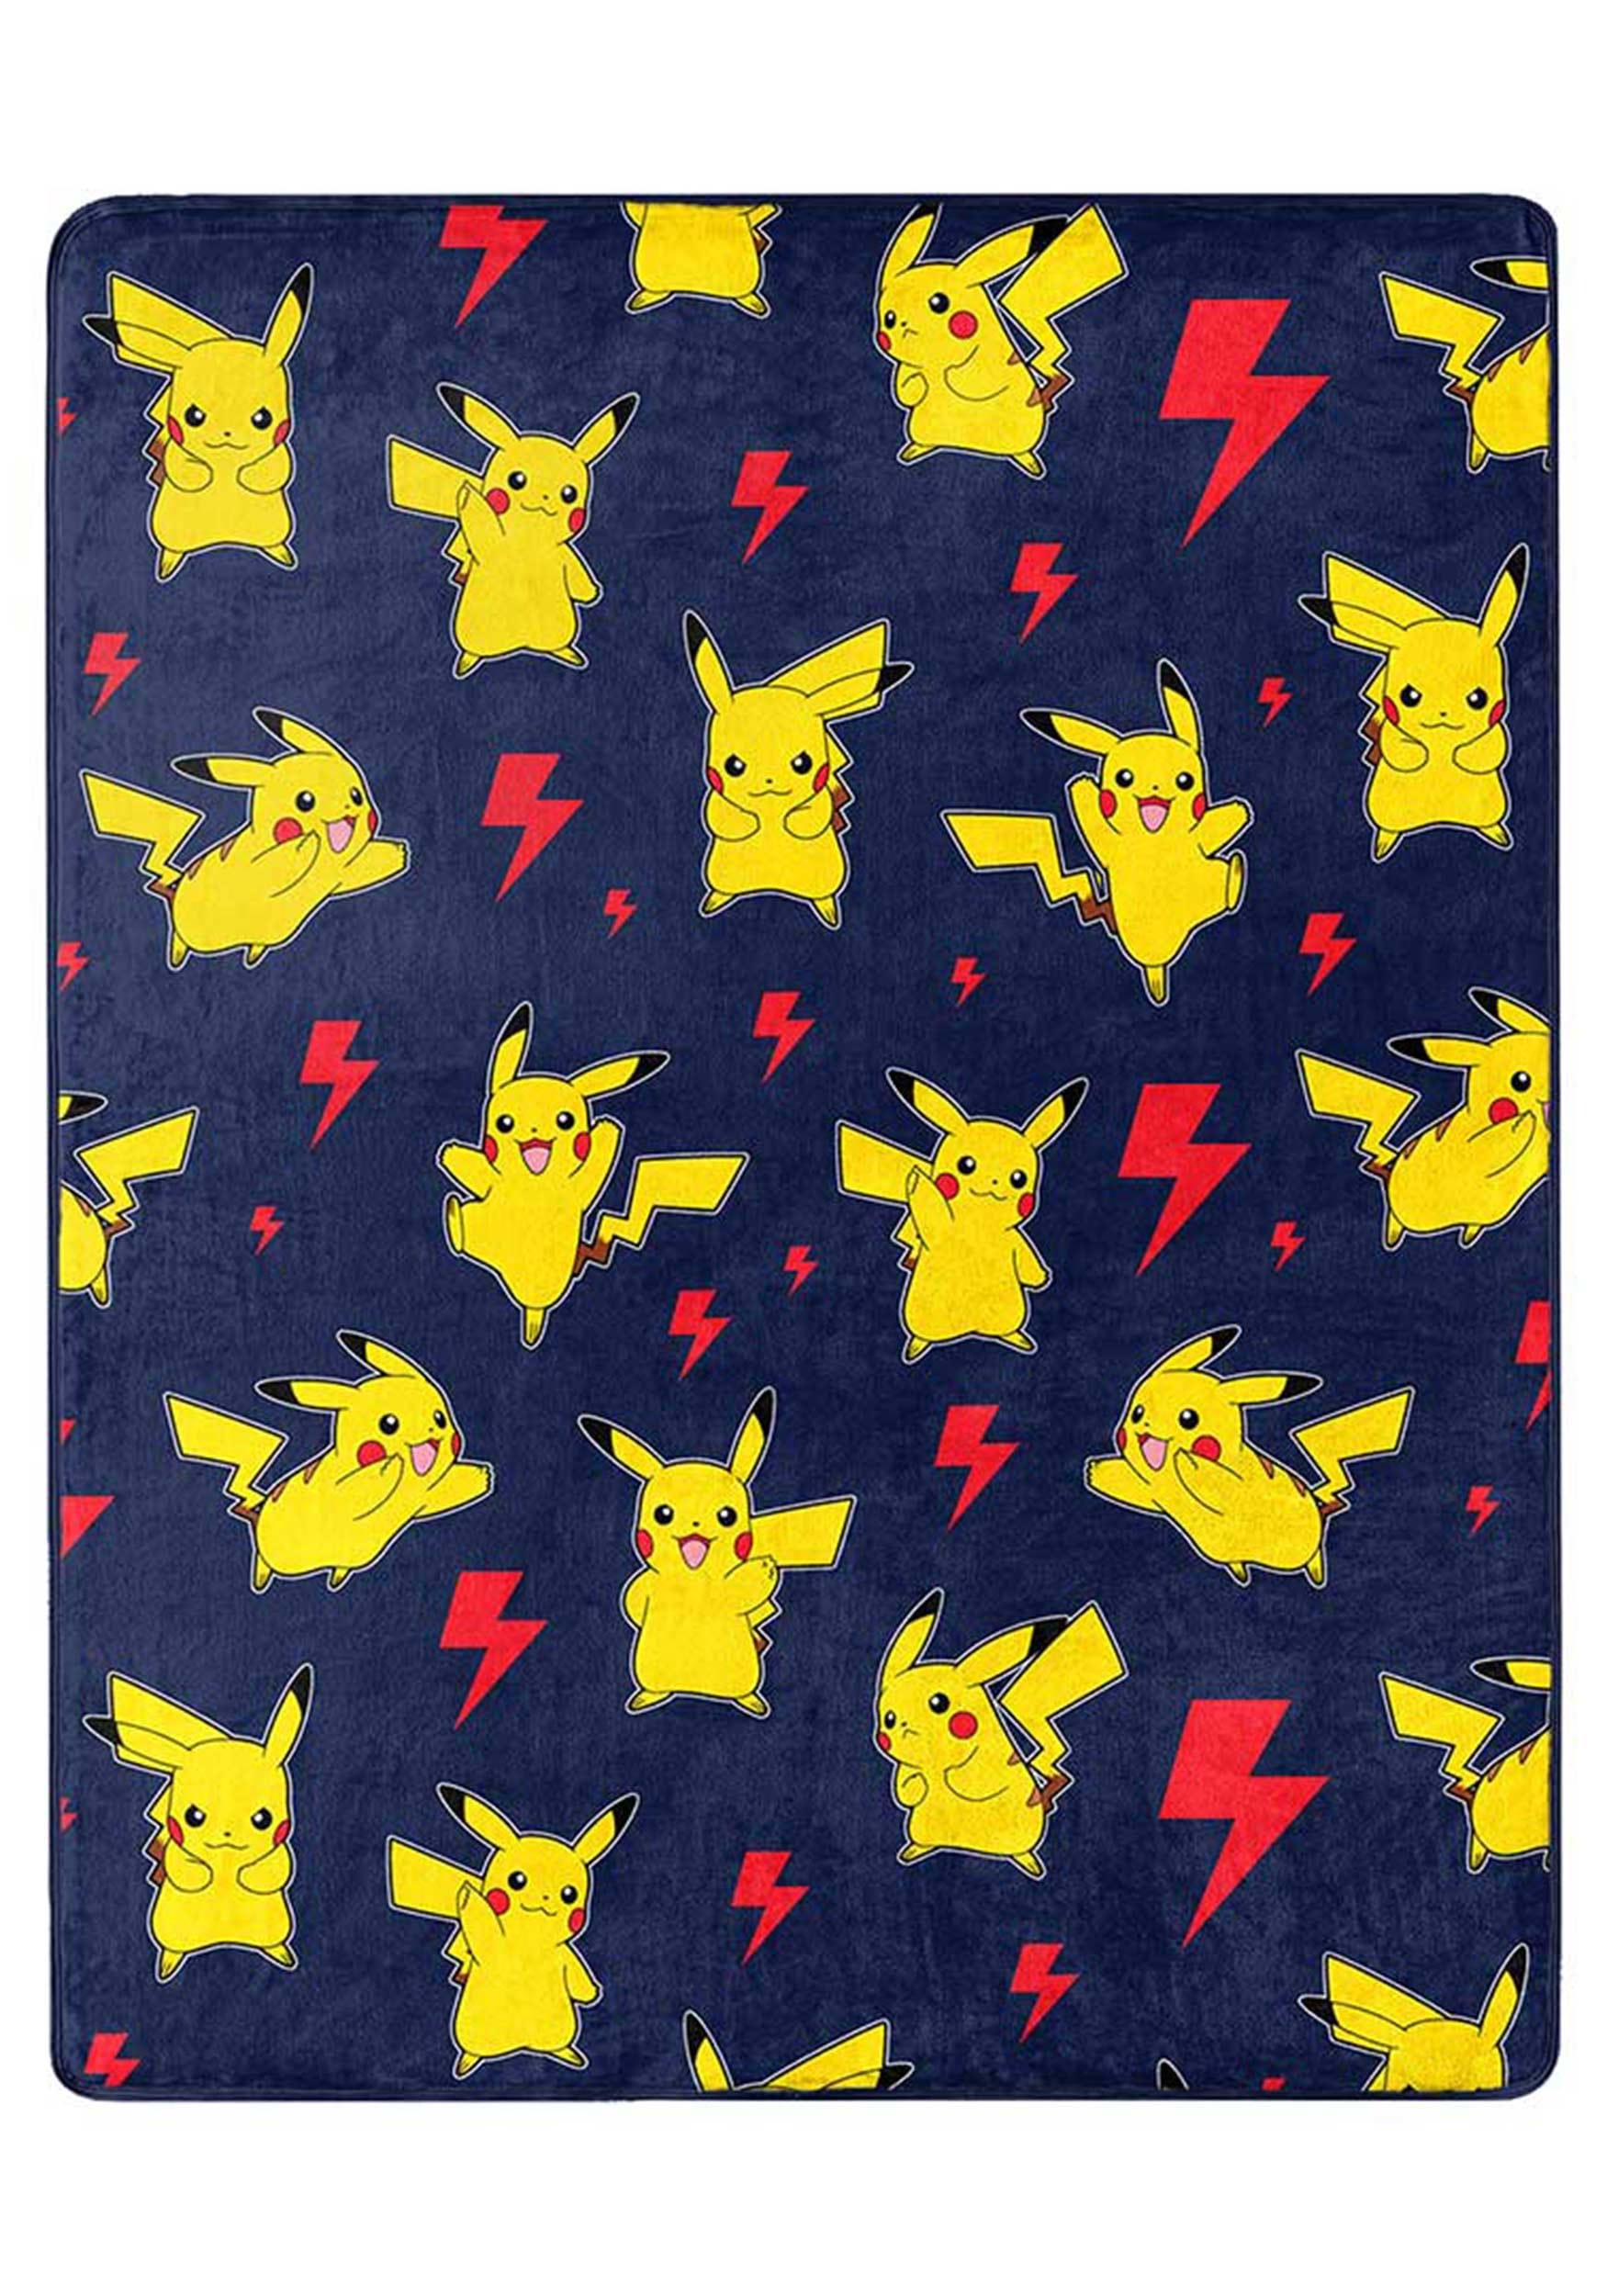 Pokémon Lightning Zap 40x50 Throw W/ Hugger